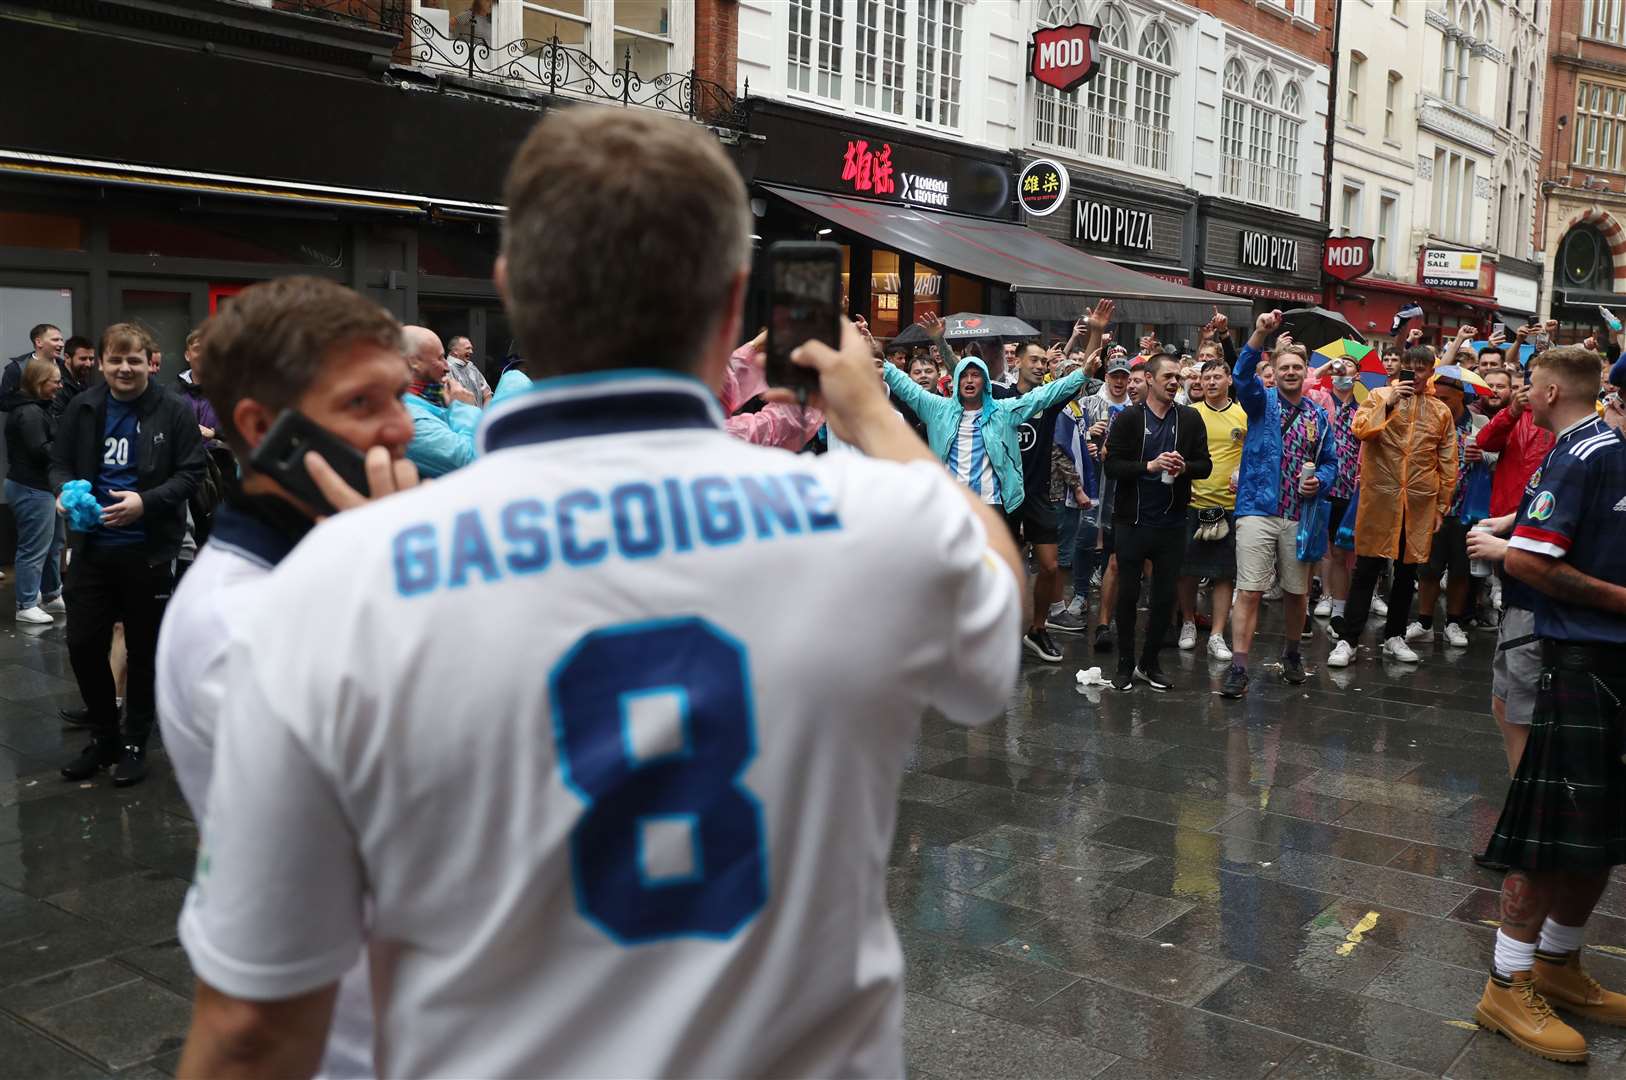 An England fan’s shirt pays tribute to Paul Gascoigne, star of Euro 96 (Kieran Cleeves/PA)